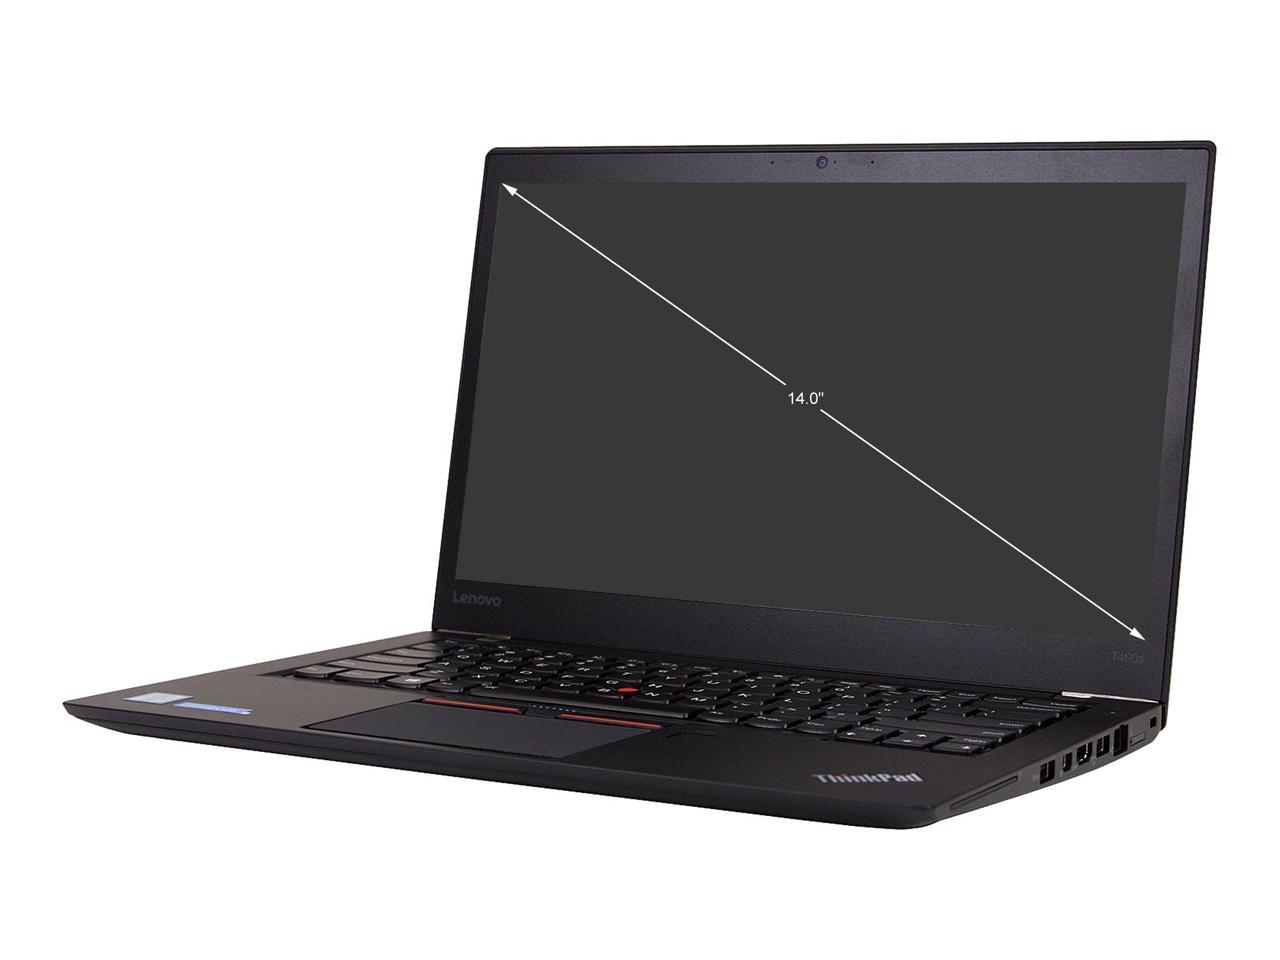 Lenovo T460S laptop